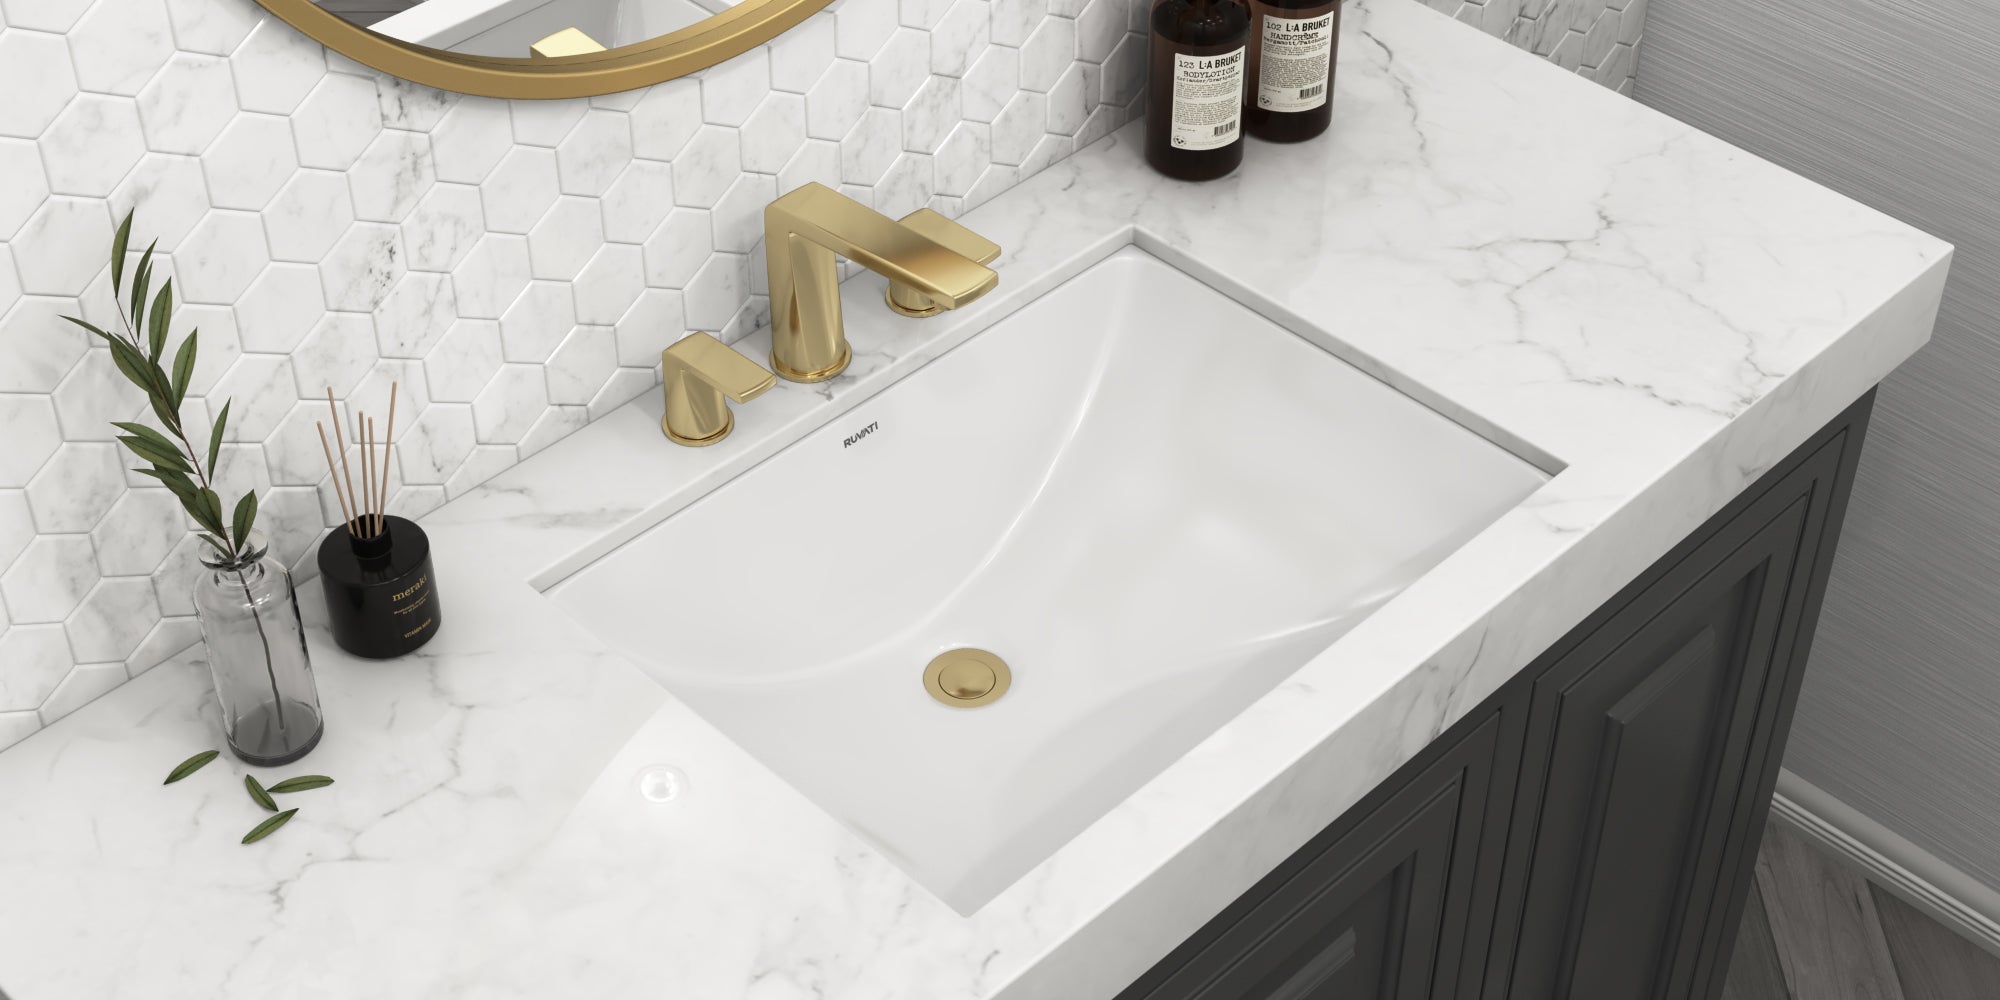 Ruvati 18" x 13" Rectangular Undermount Bathroom Sink in White